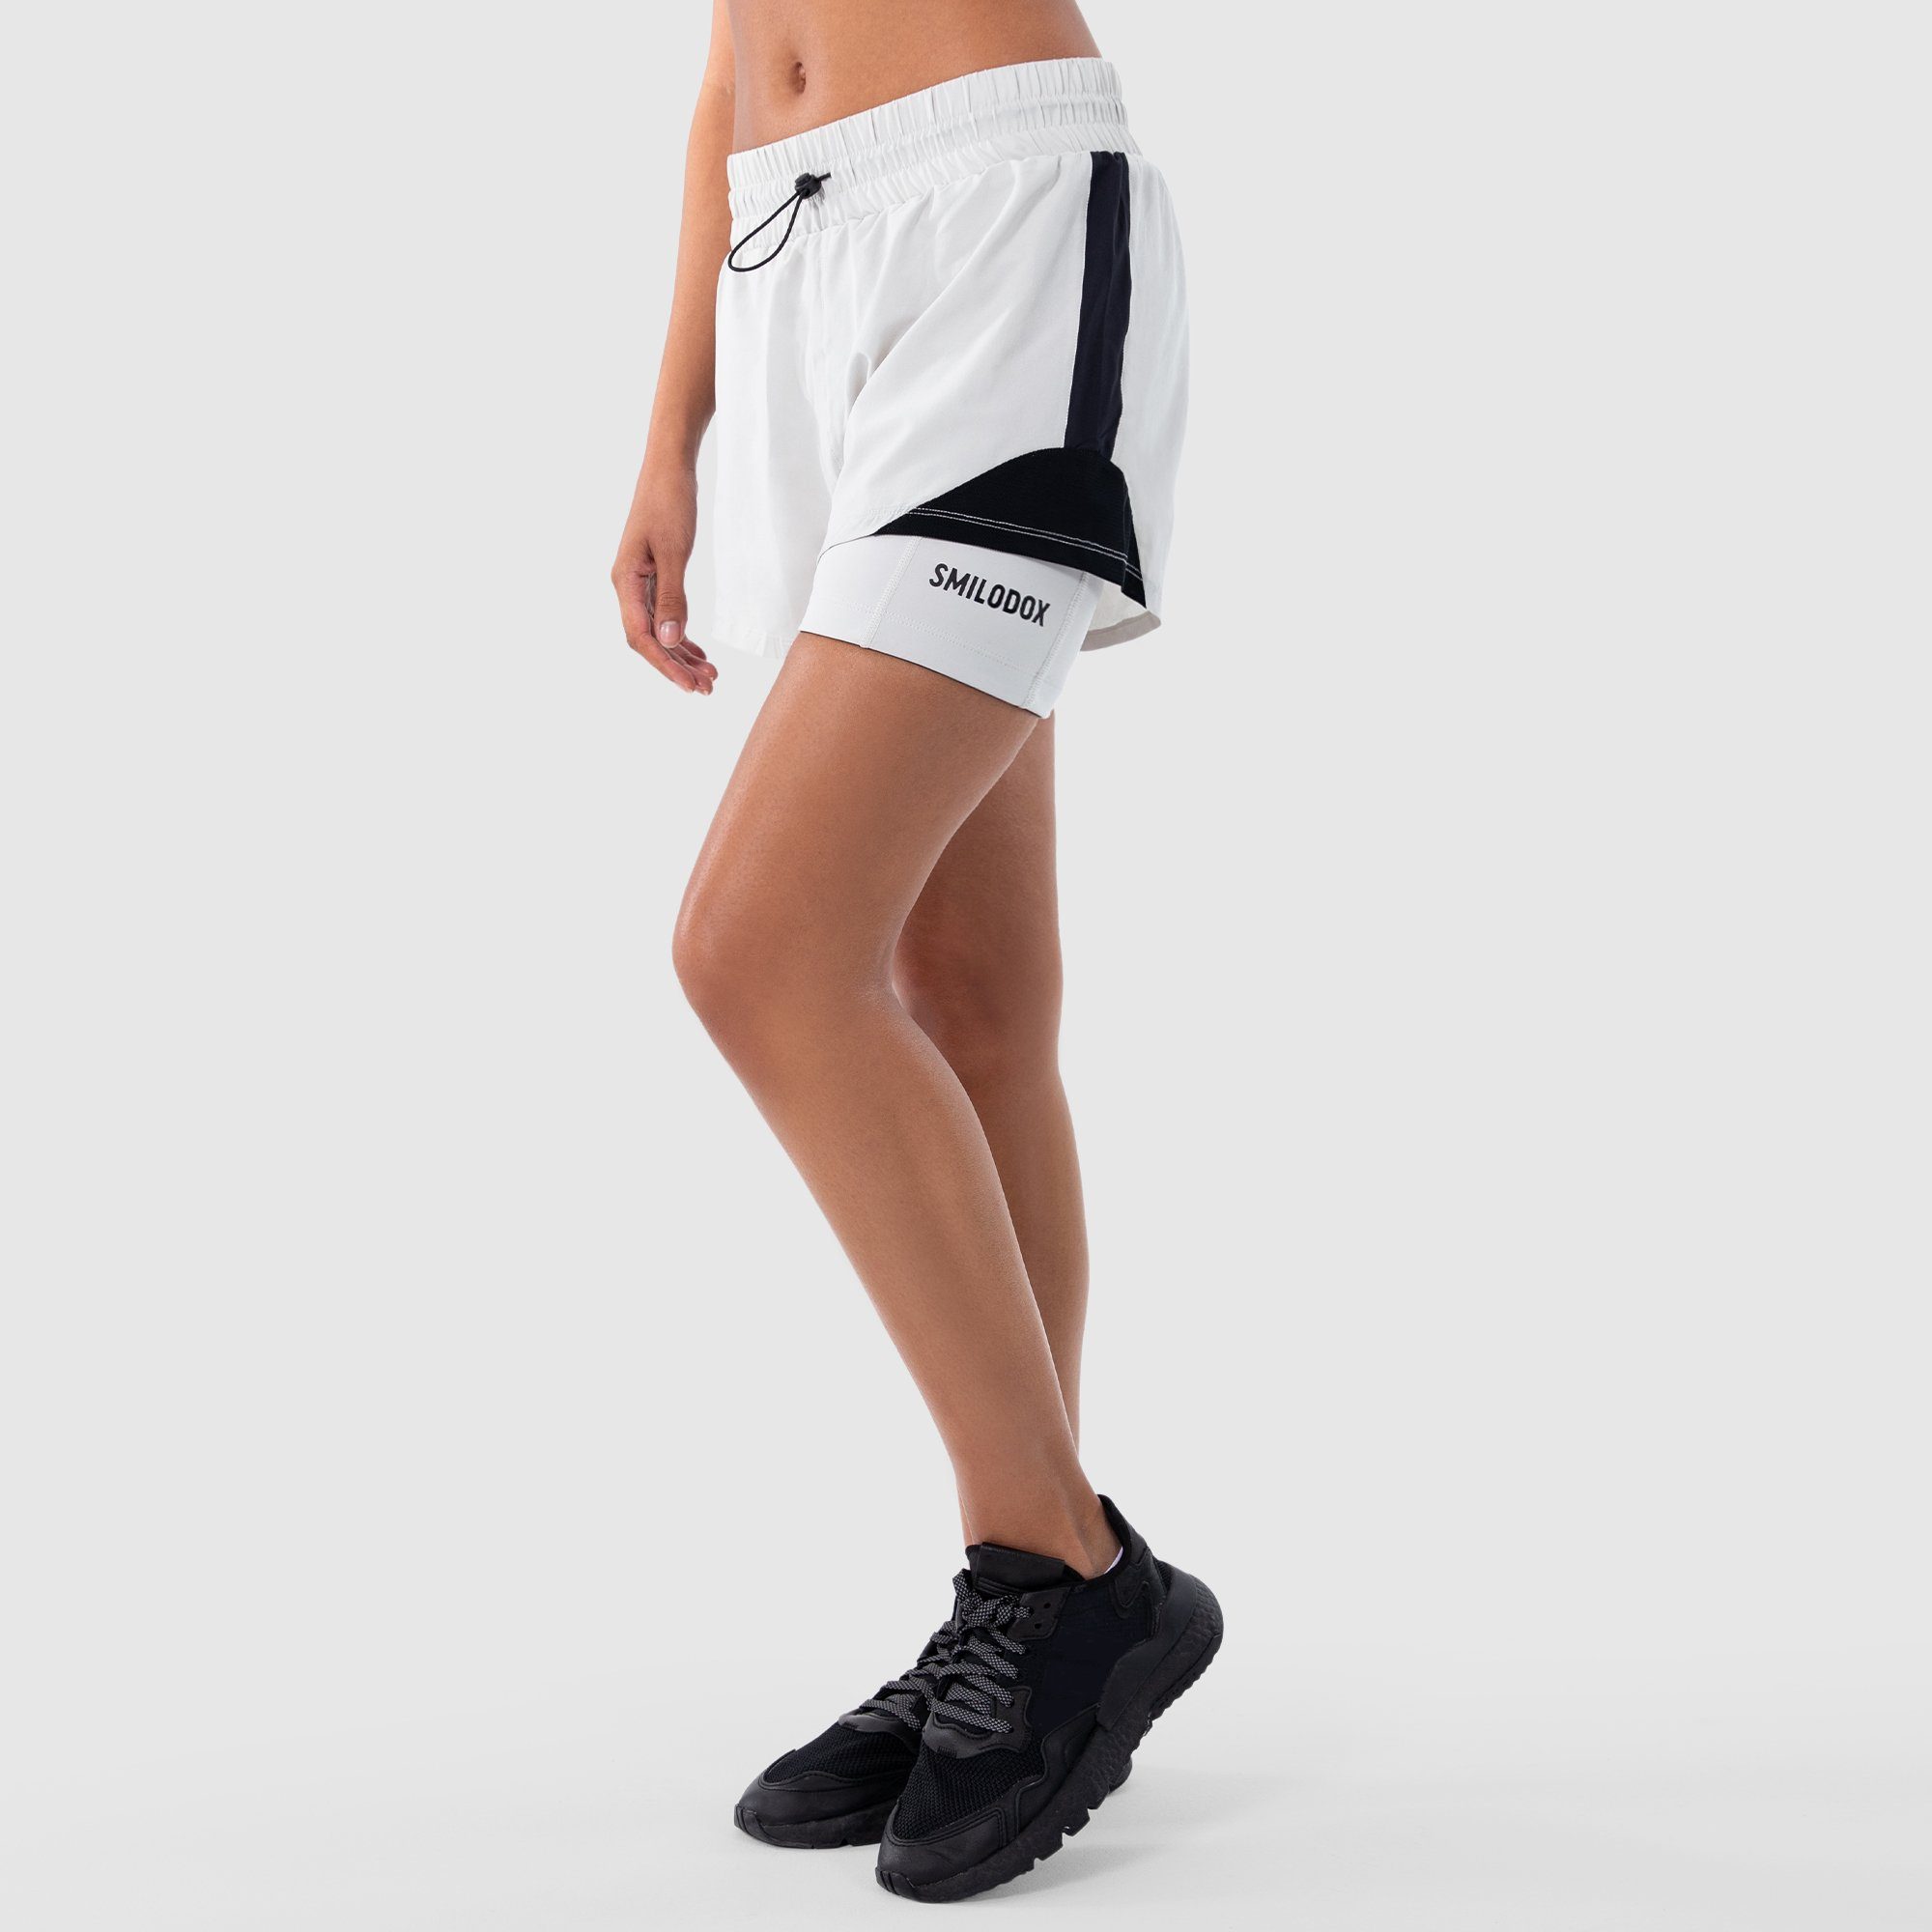 Maisie Grau Smilodox Shorts